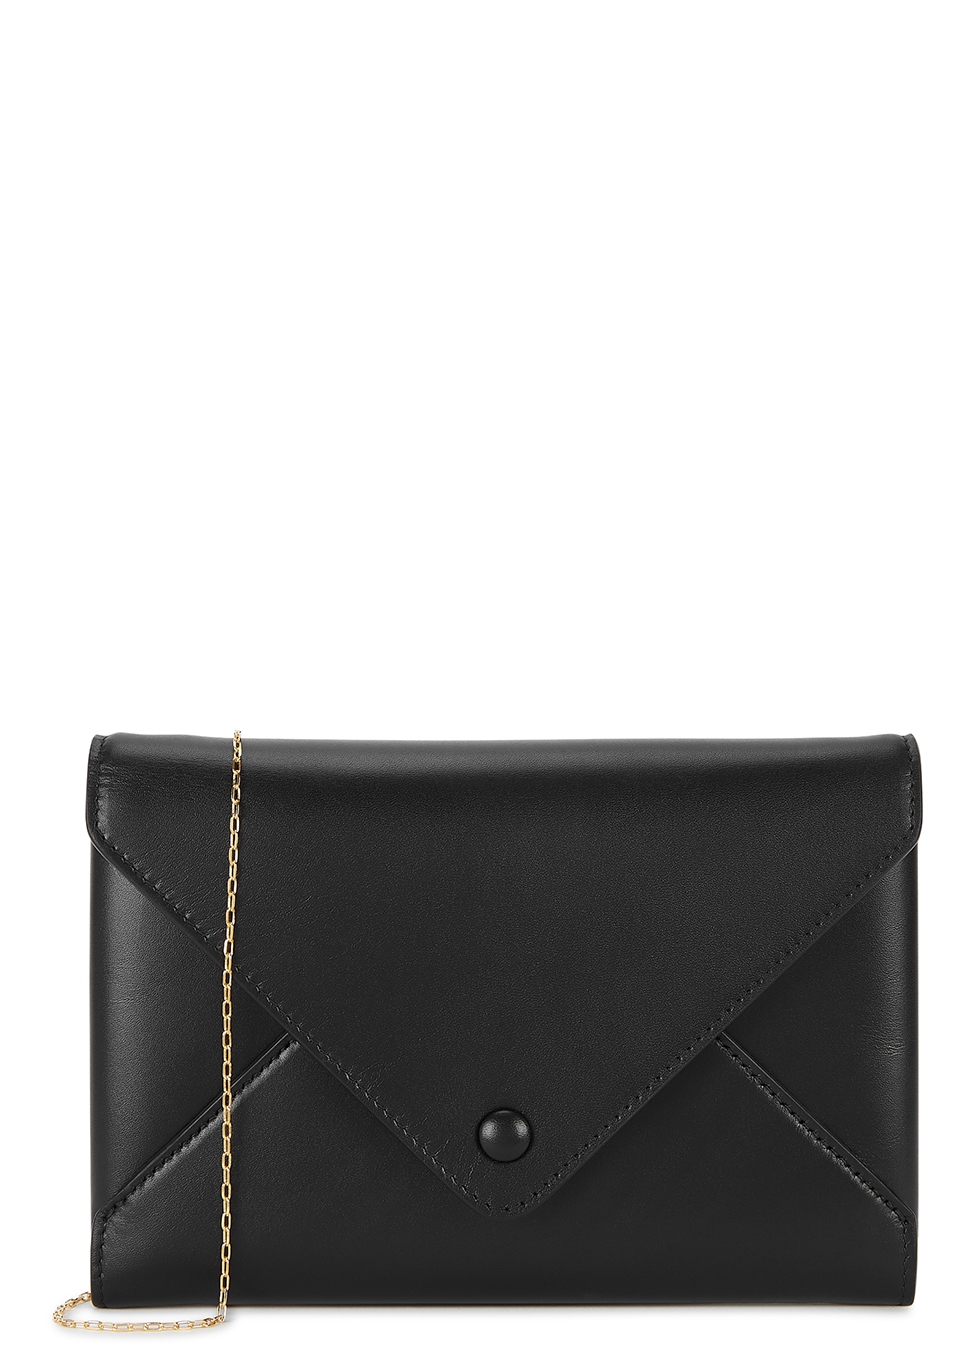 Envelope black leather clutch